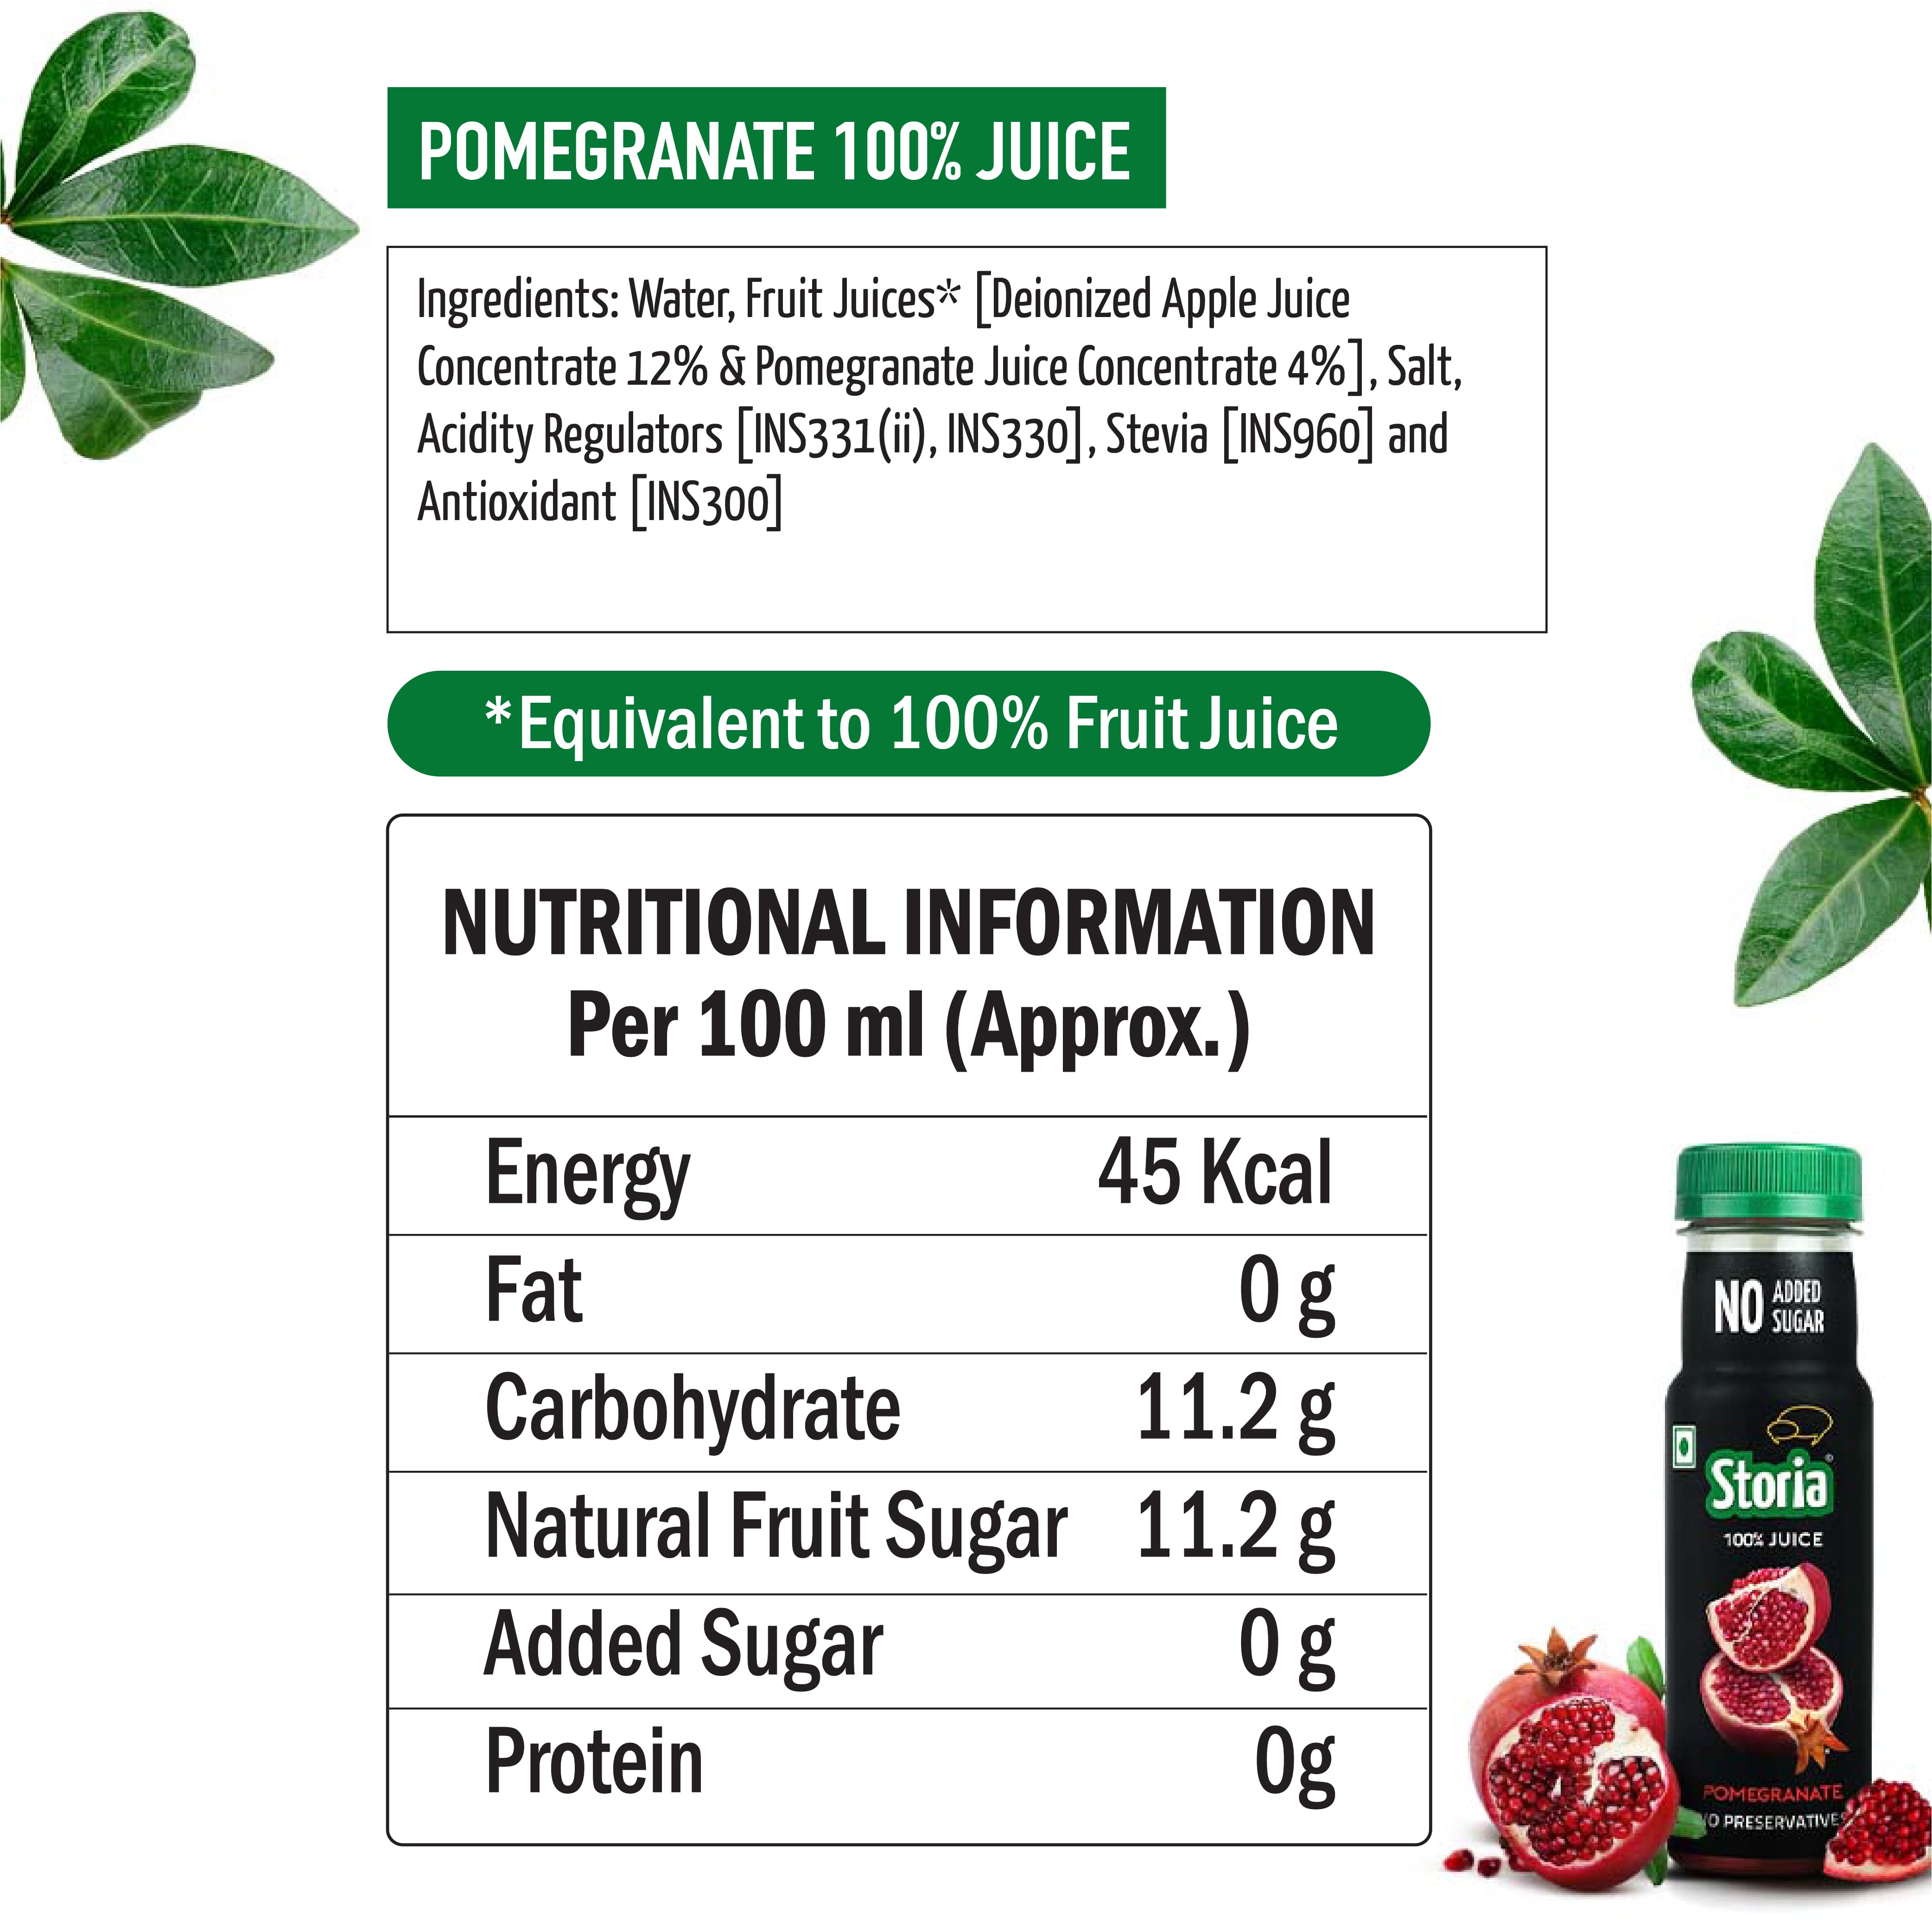 Pomegranate - 100% Juice4